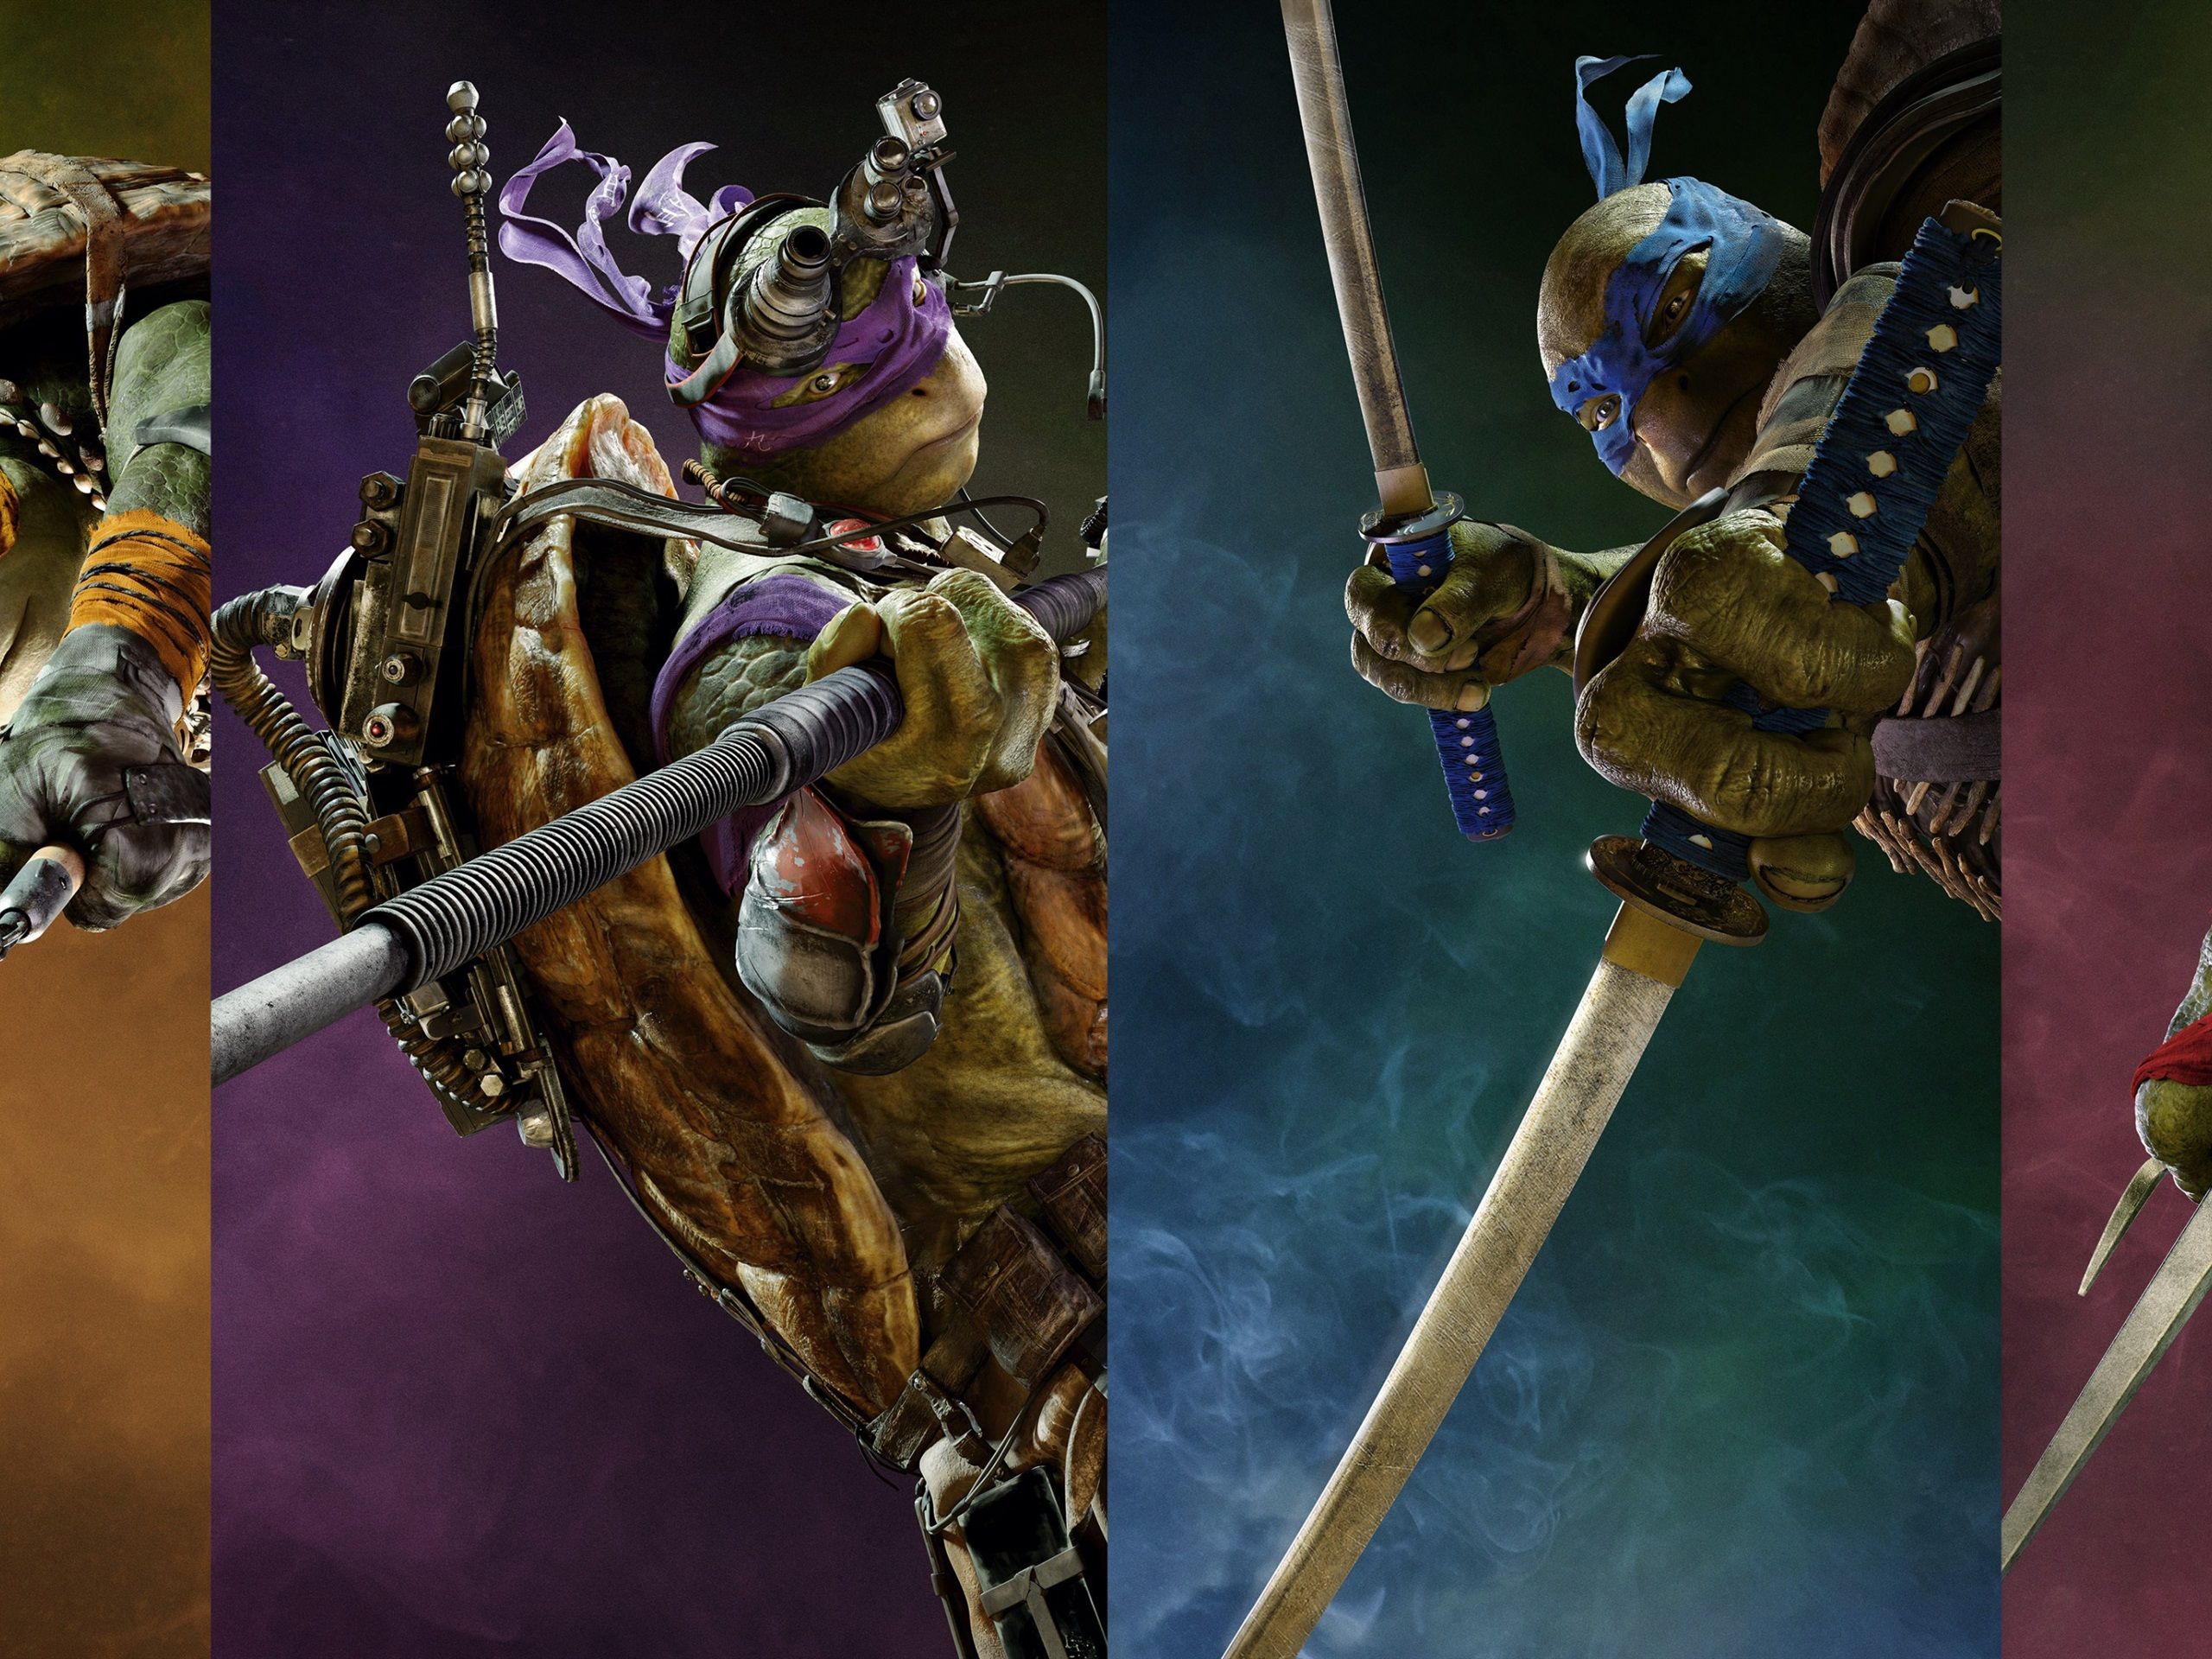 Wallpaper Four heroes, Teenage Mutant Ninja Turtles 3840x2160 UHD 4K Picture, Image